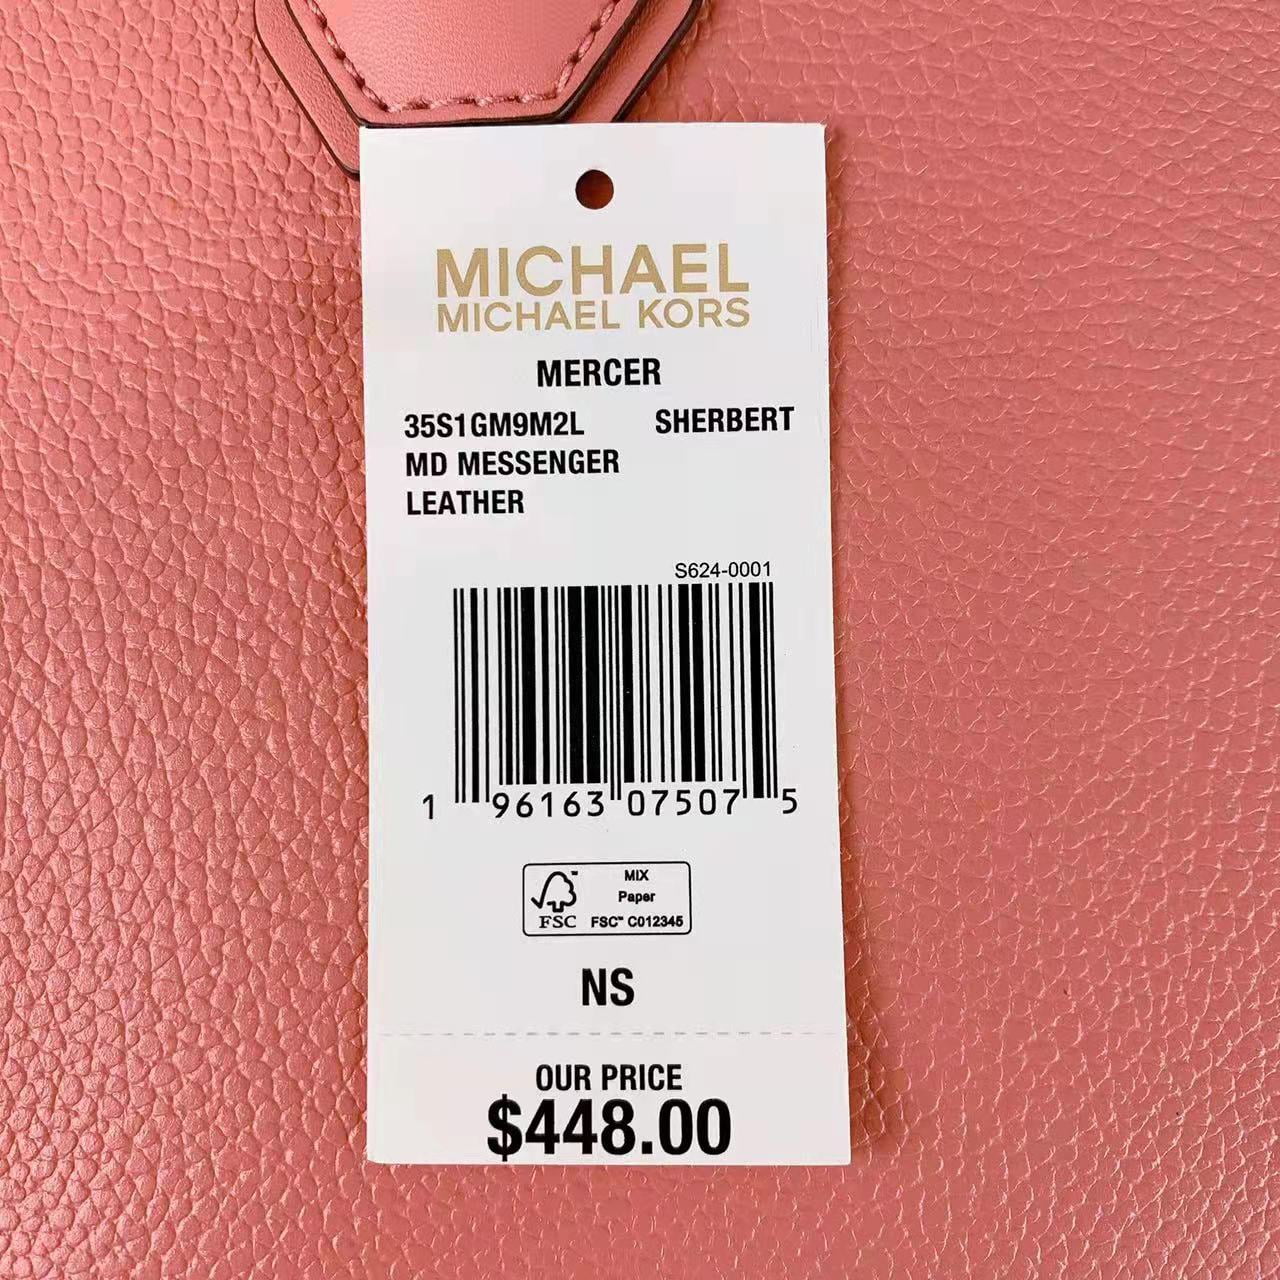 Michael Kors Mercer Medium Pebbled Leather Crossbody Bag in Mulberry  (35S1GM9M2L) - USA Loveshoppe